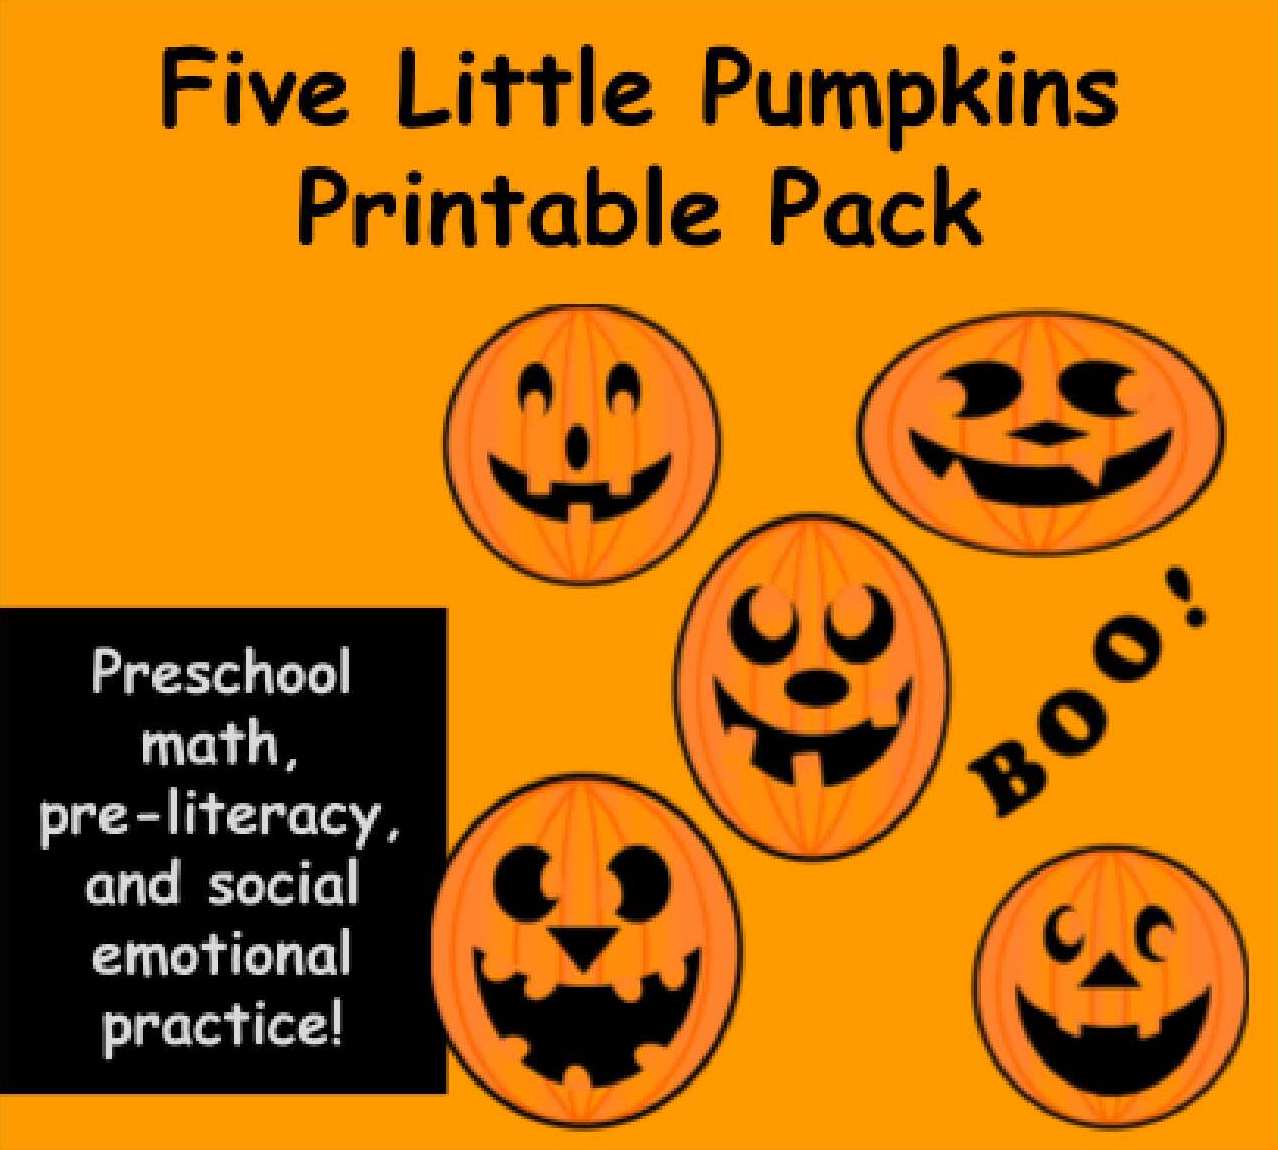 5 Little Pumpkins image